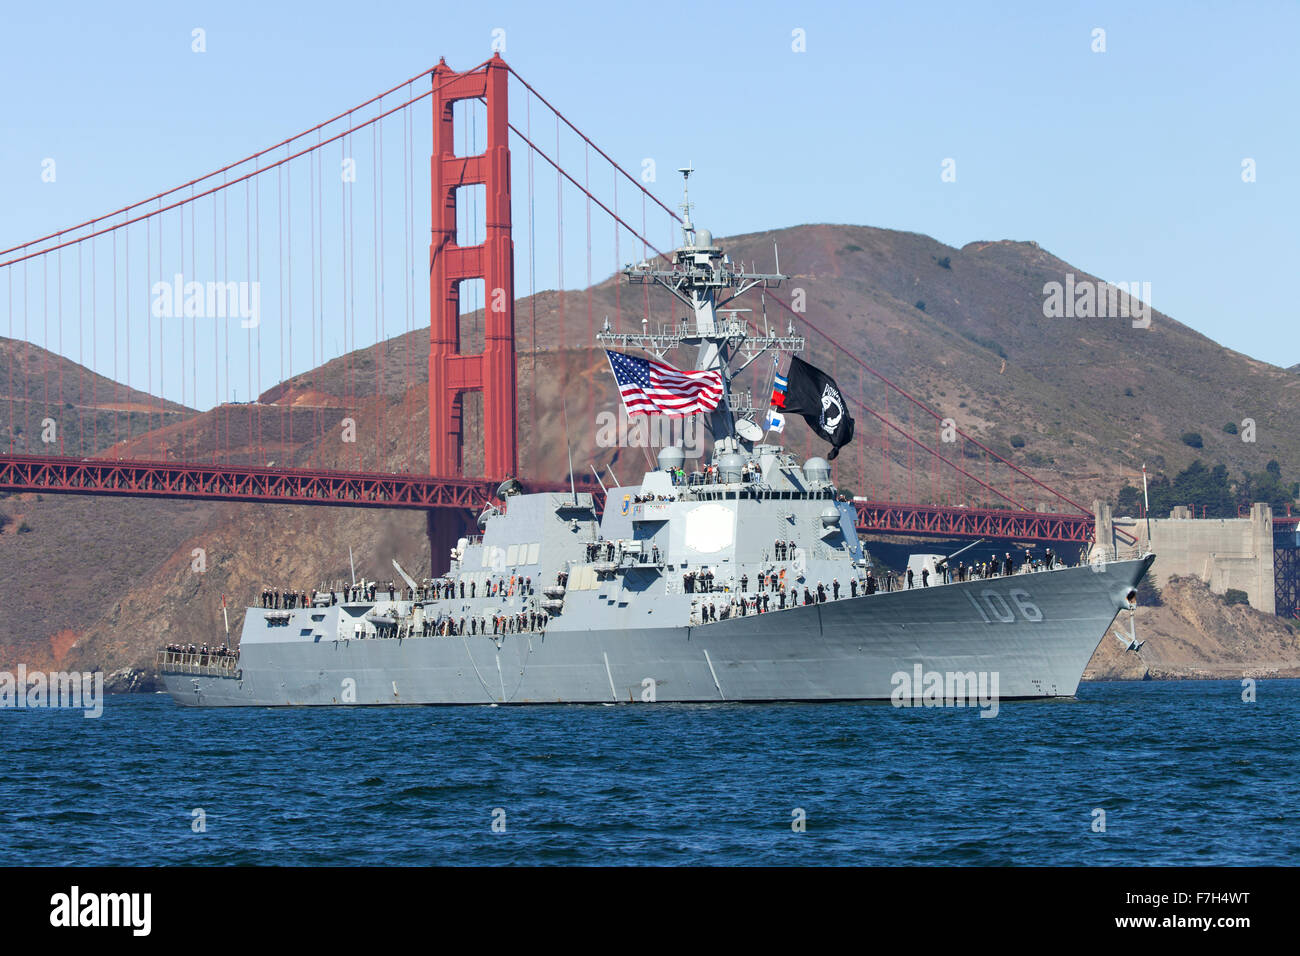 La classe Arleigh Burke destroyer lance-missiles USS Stockdale (DDG-106) entre dans la baie de San Francisco. Banque D'Images